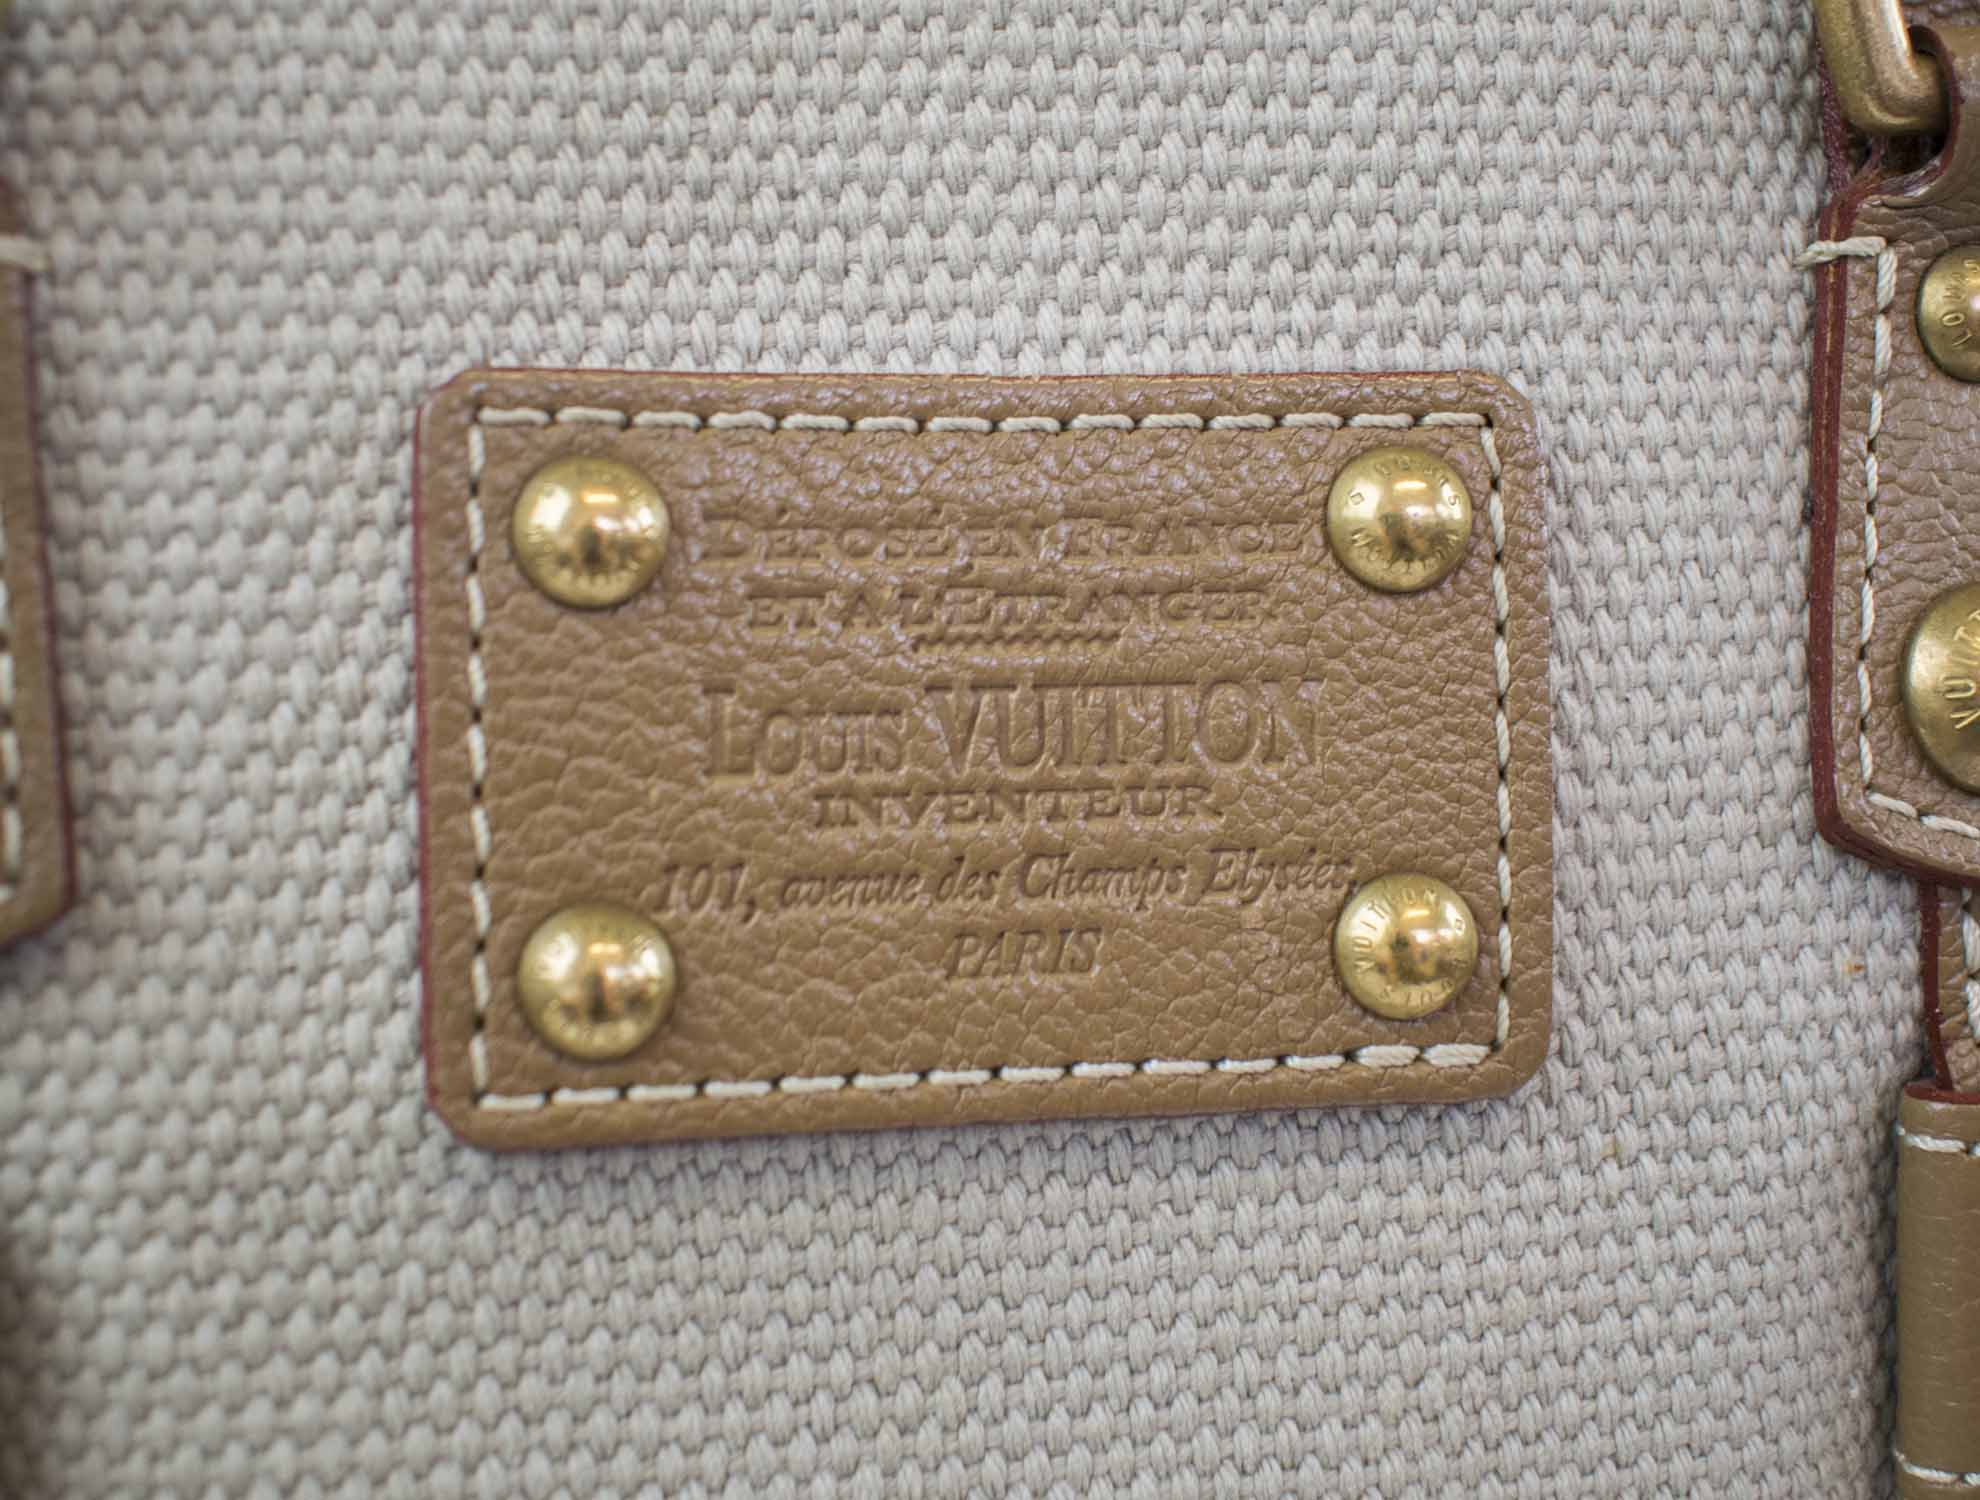 Louis Vuitton MONOGRAM 2021-22FW Steamer Tote (M58710)